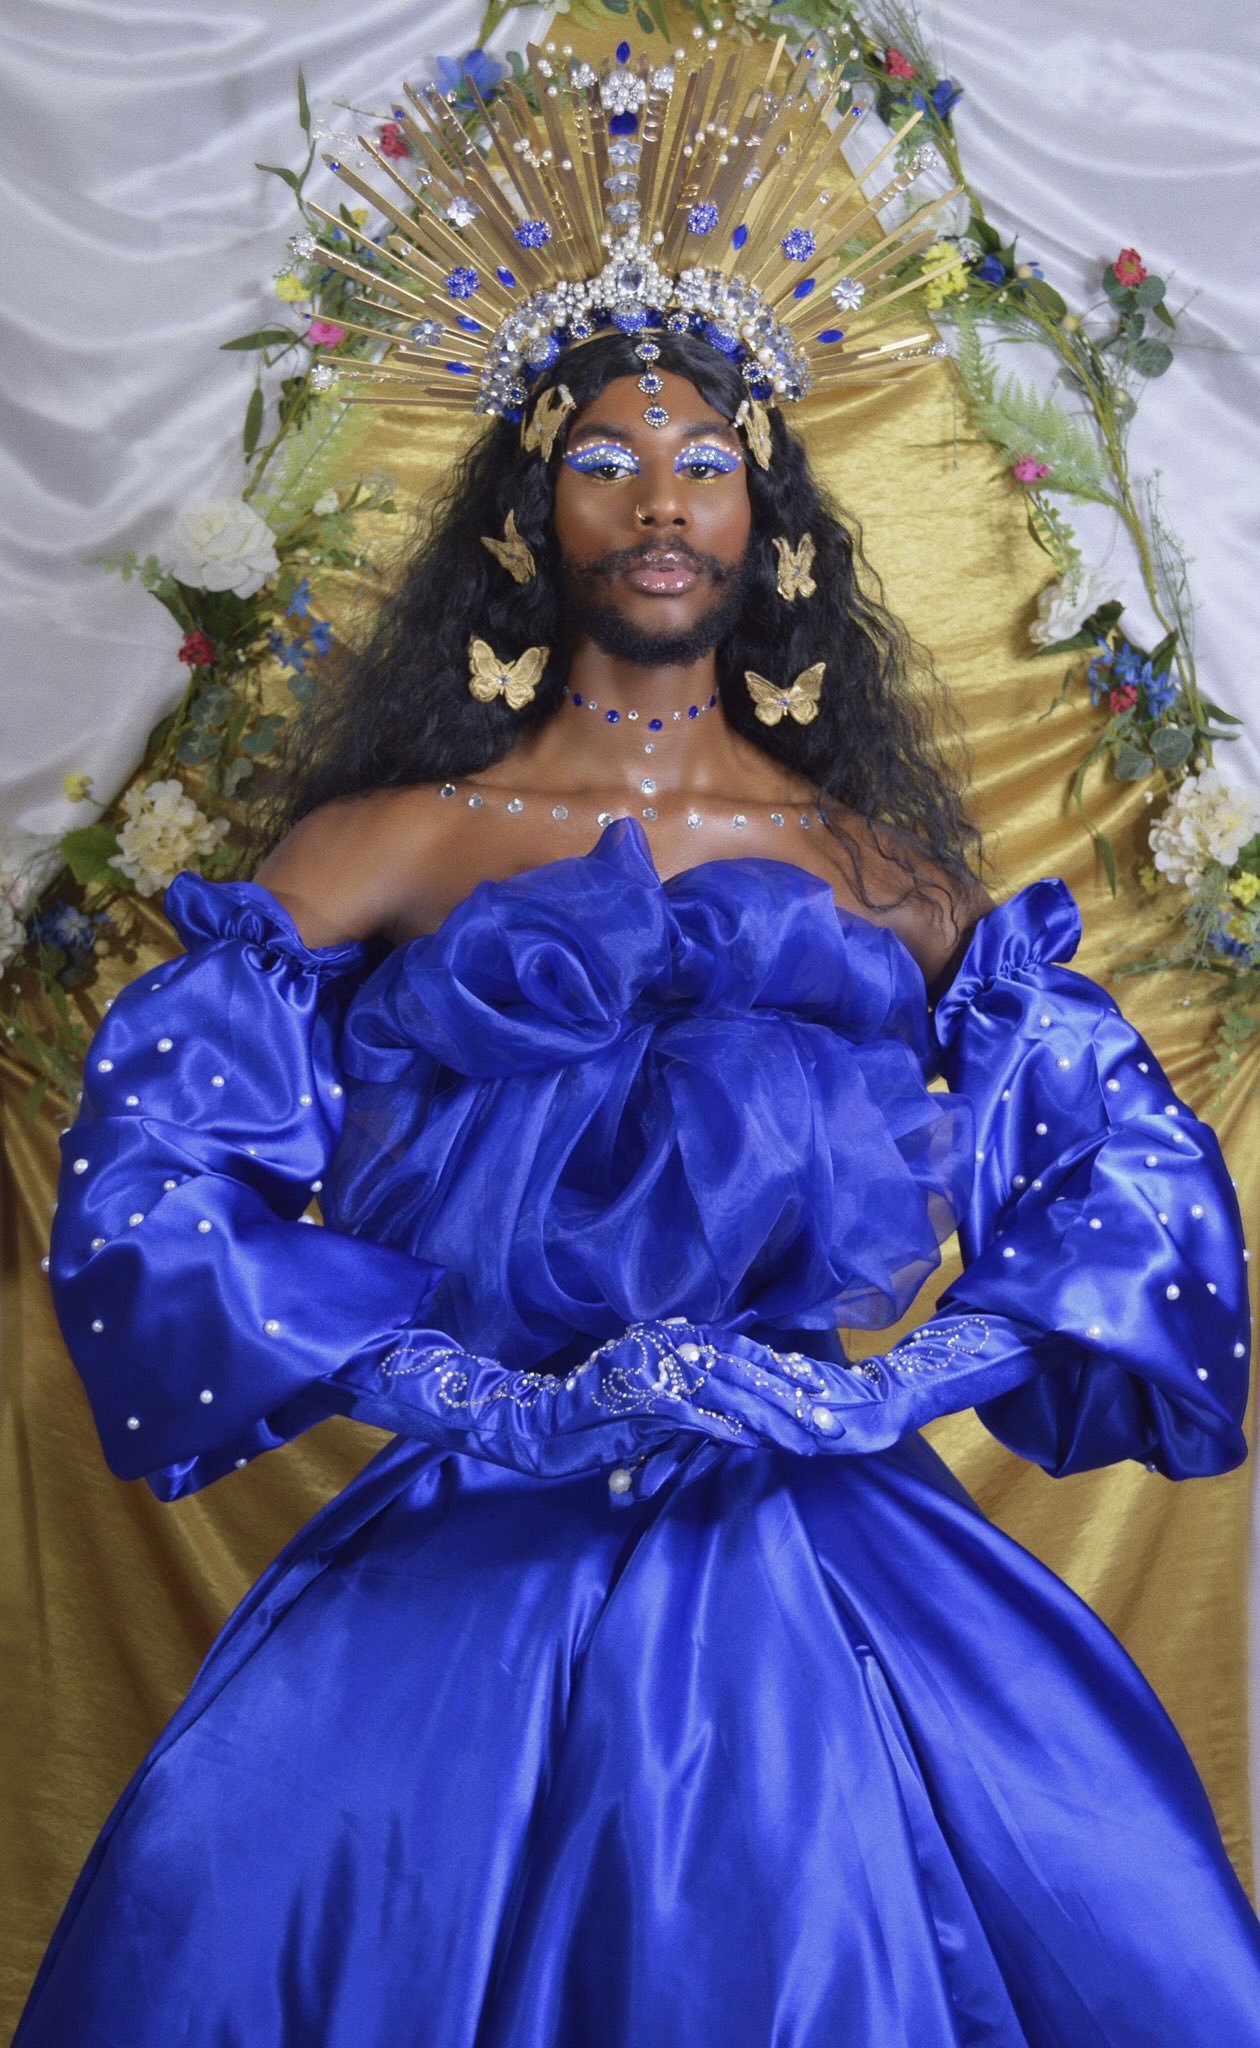 publiclyprismatic:chrissofly (he/him), queer artist, in his princess series mod reaux